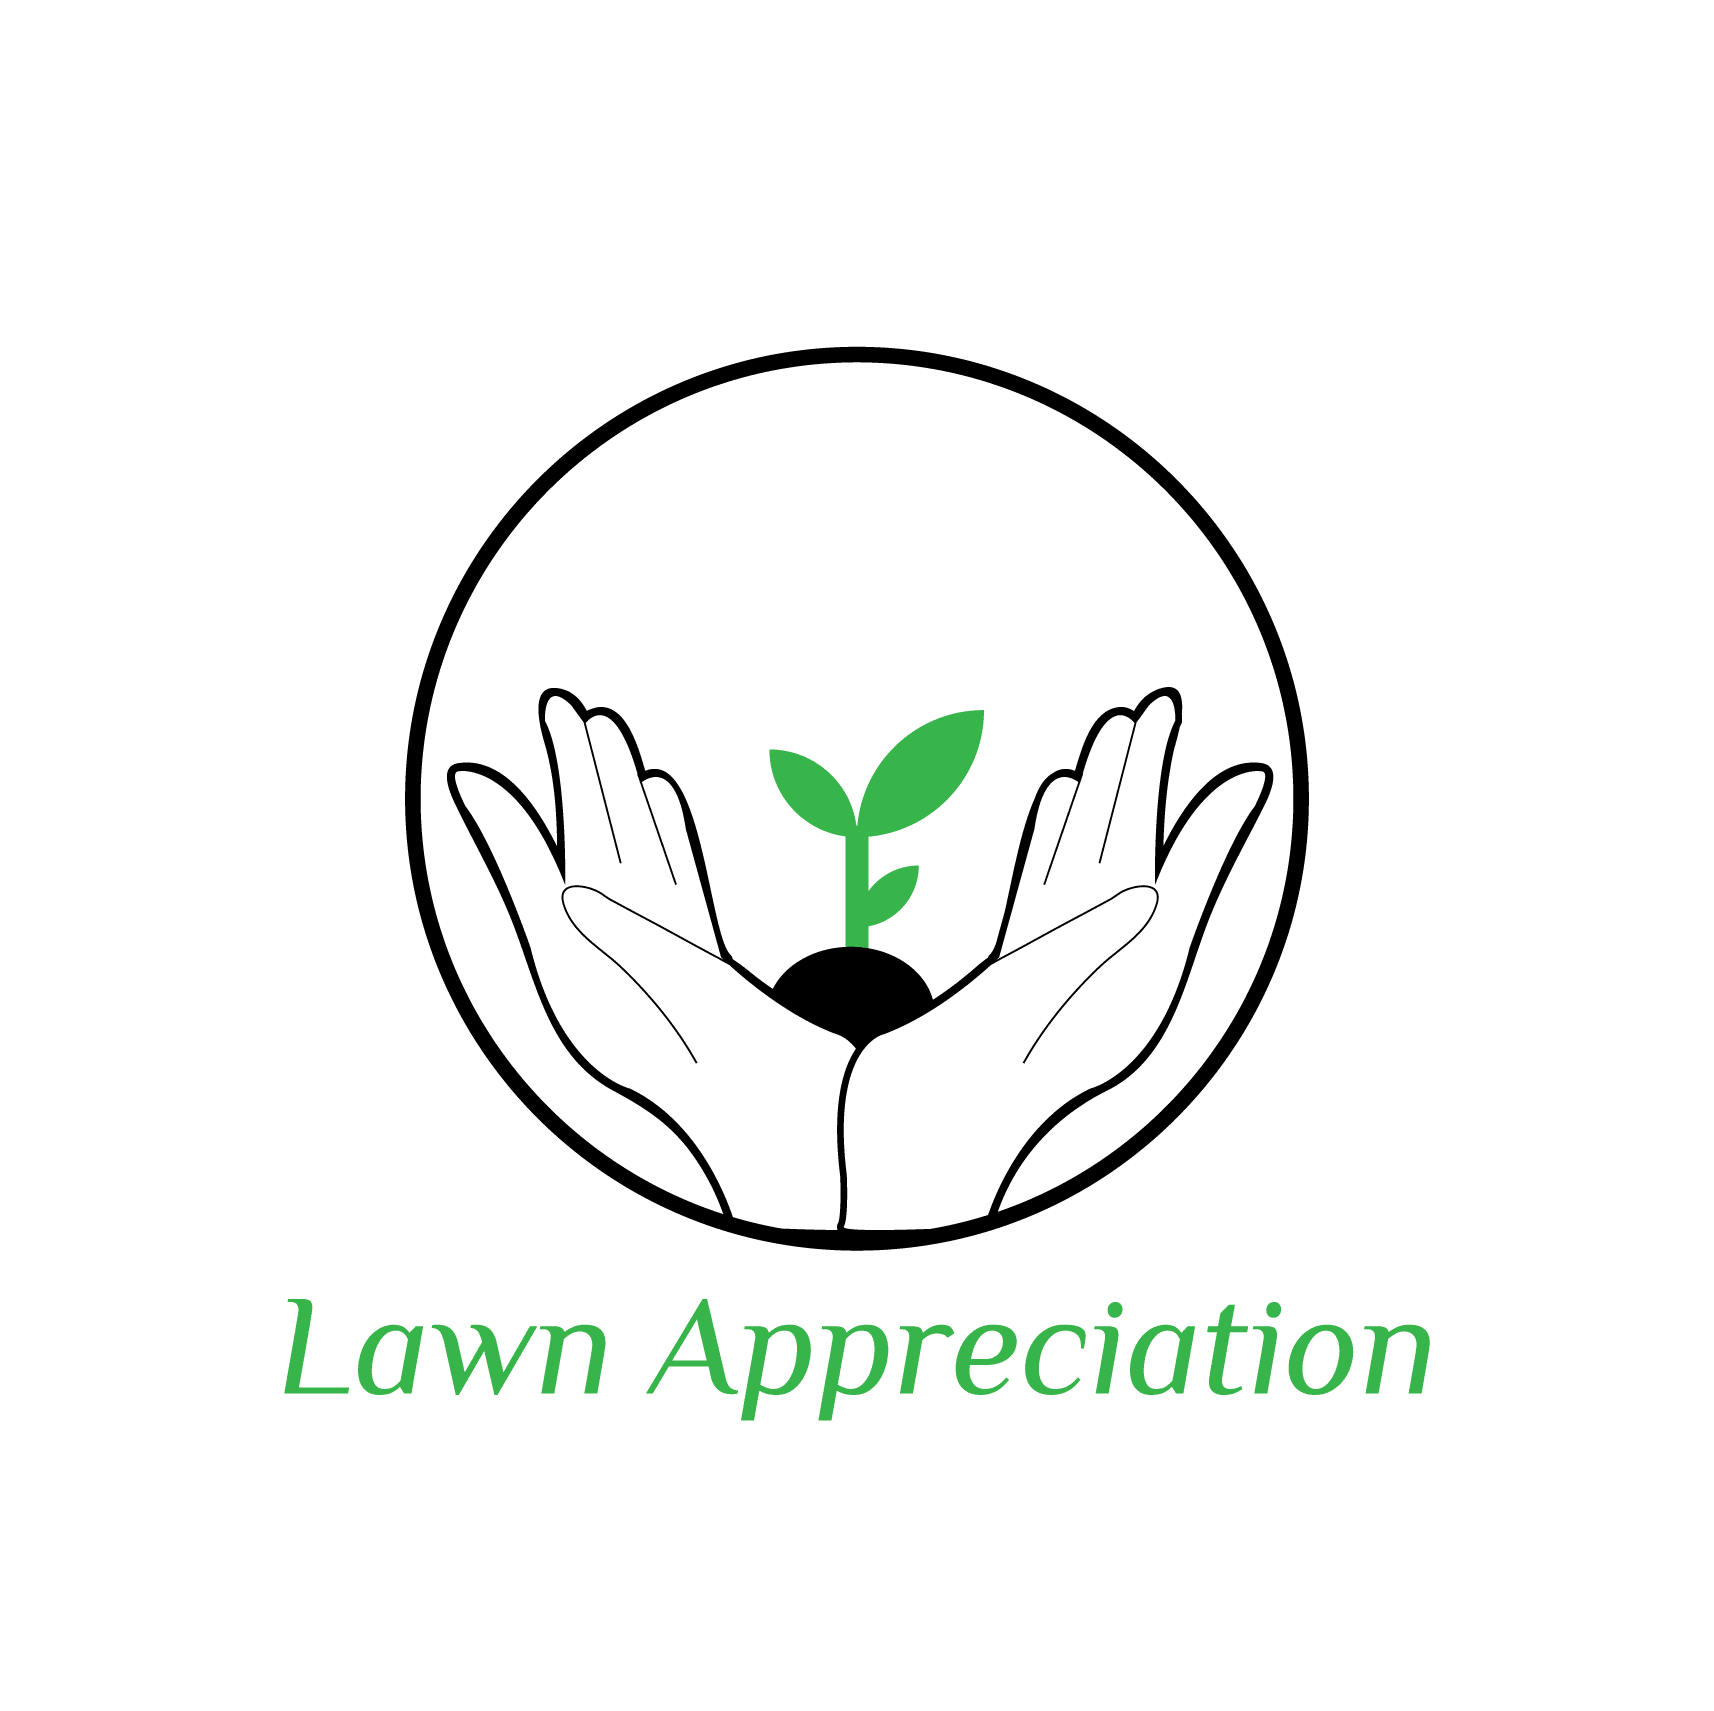 Appreciation Logo - Home – Raleigh Lawn Care Company - Lawn Appreciation